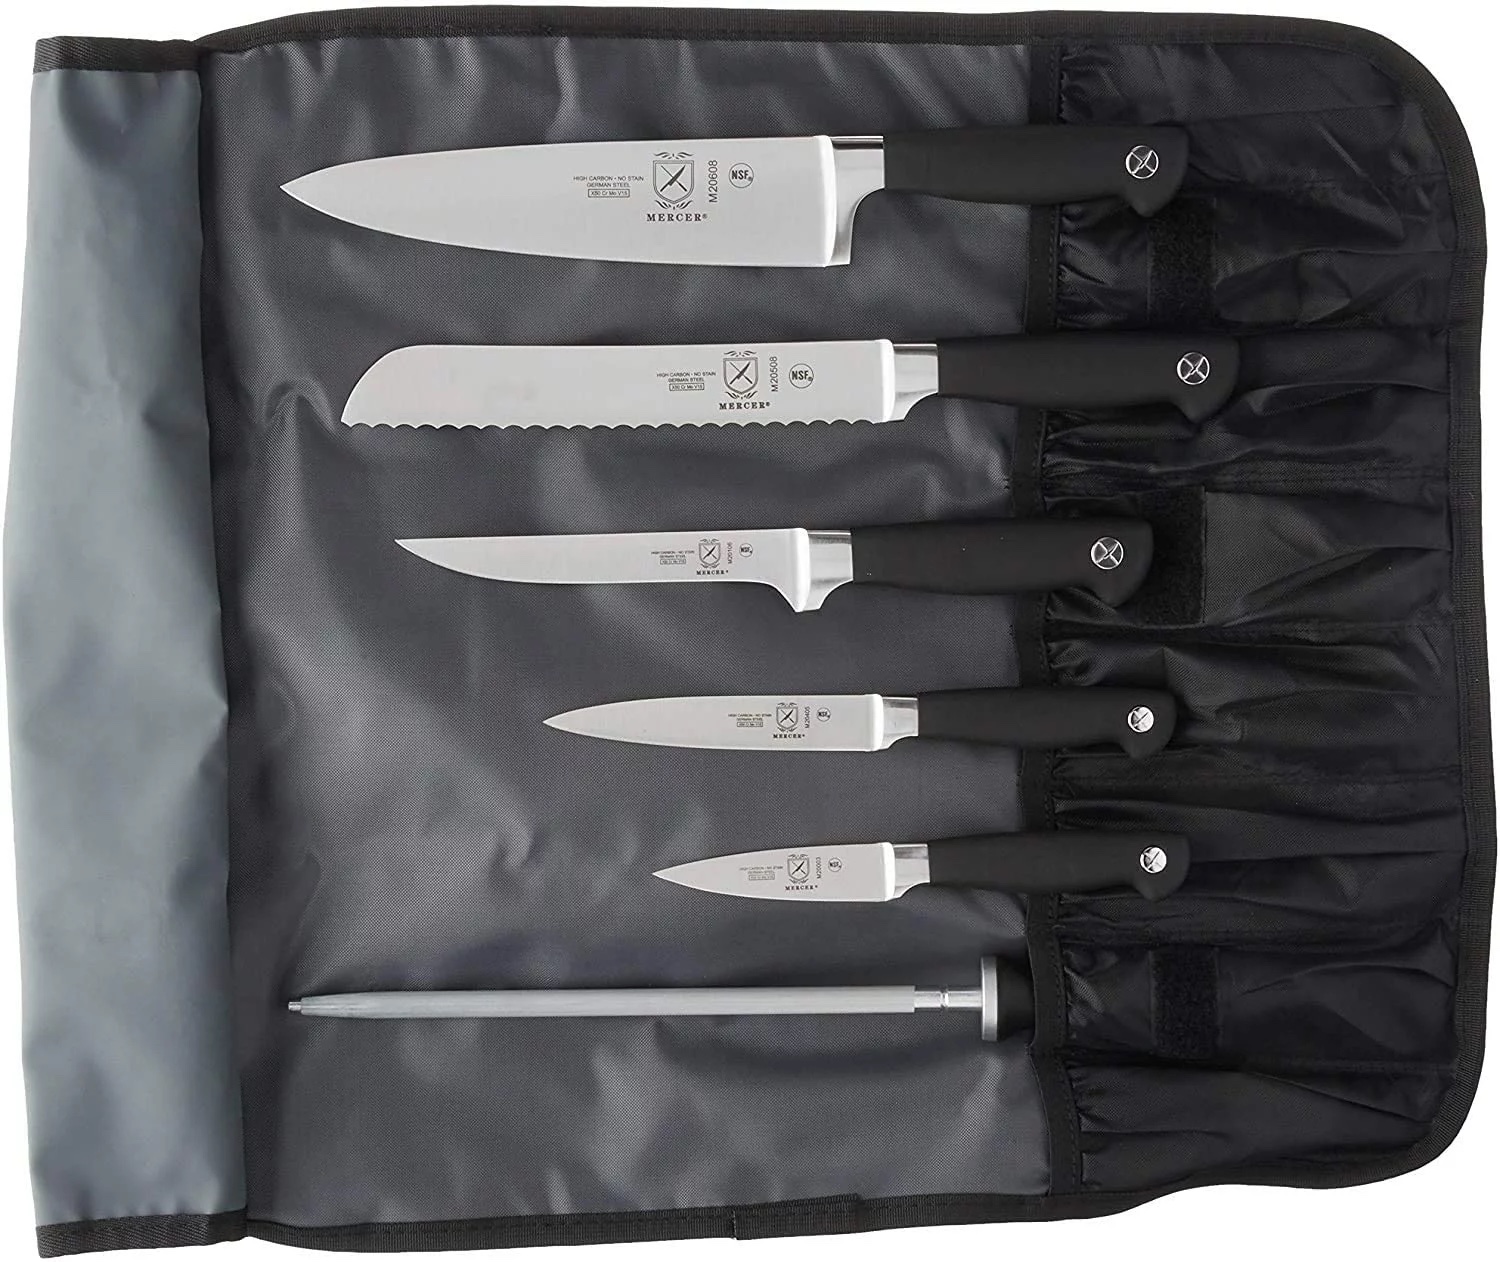 https://www.wellandgood.com/wp-content/uploads/2021/10/Mercer-Culinary-Genesis-7-Piece-Forged-Knife-Roll-Set-1.jpg